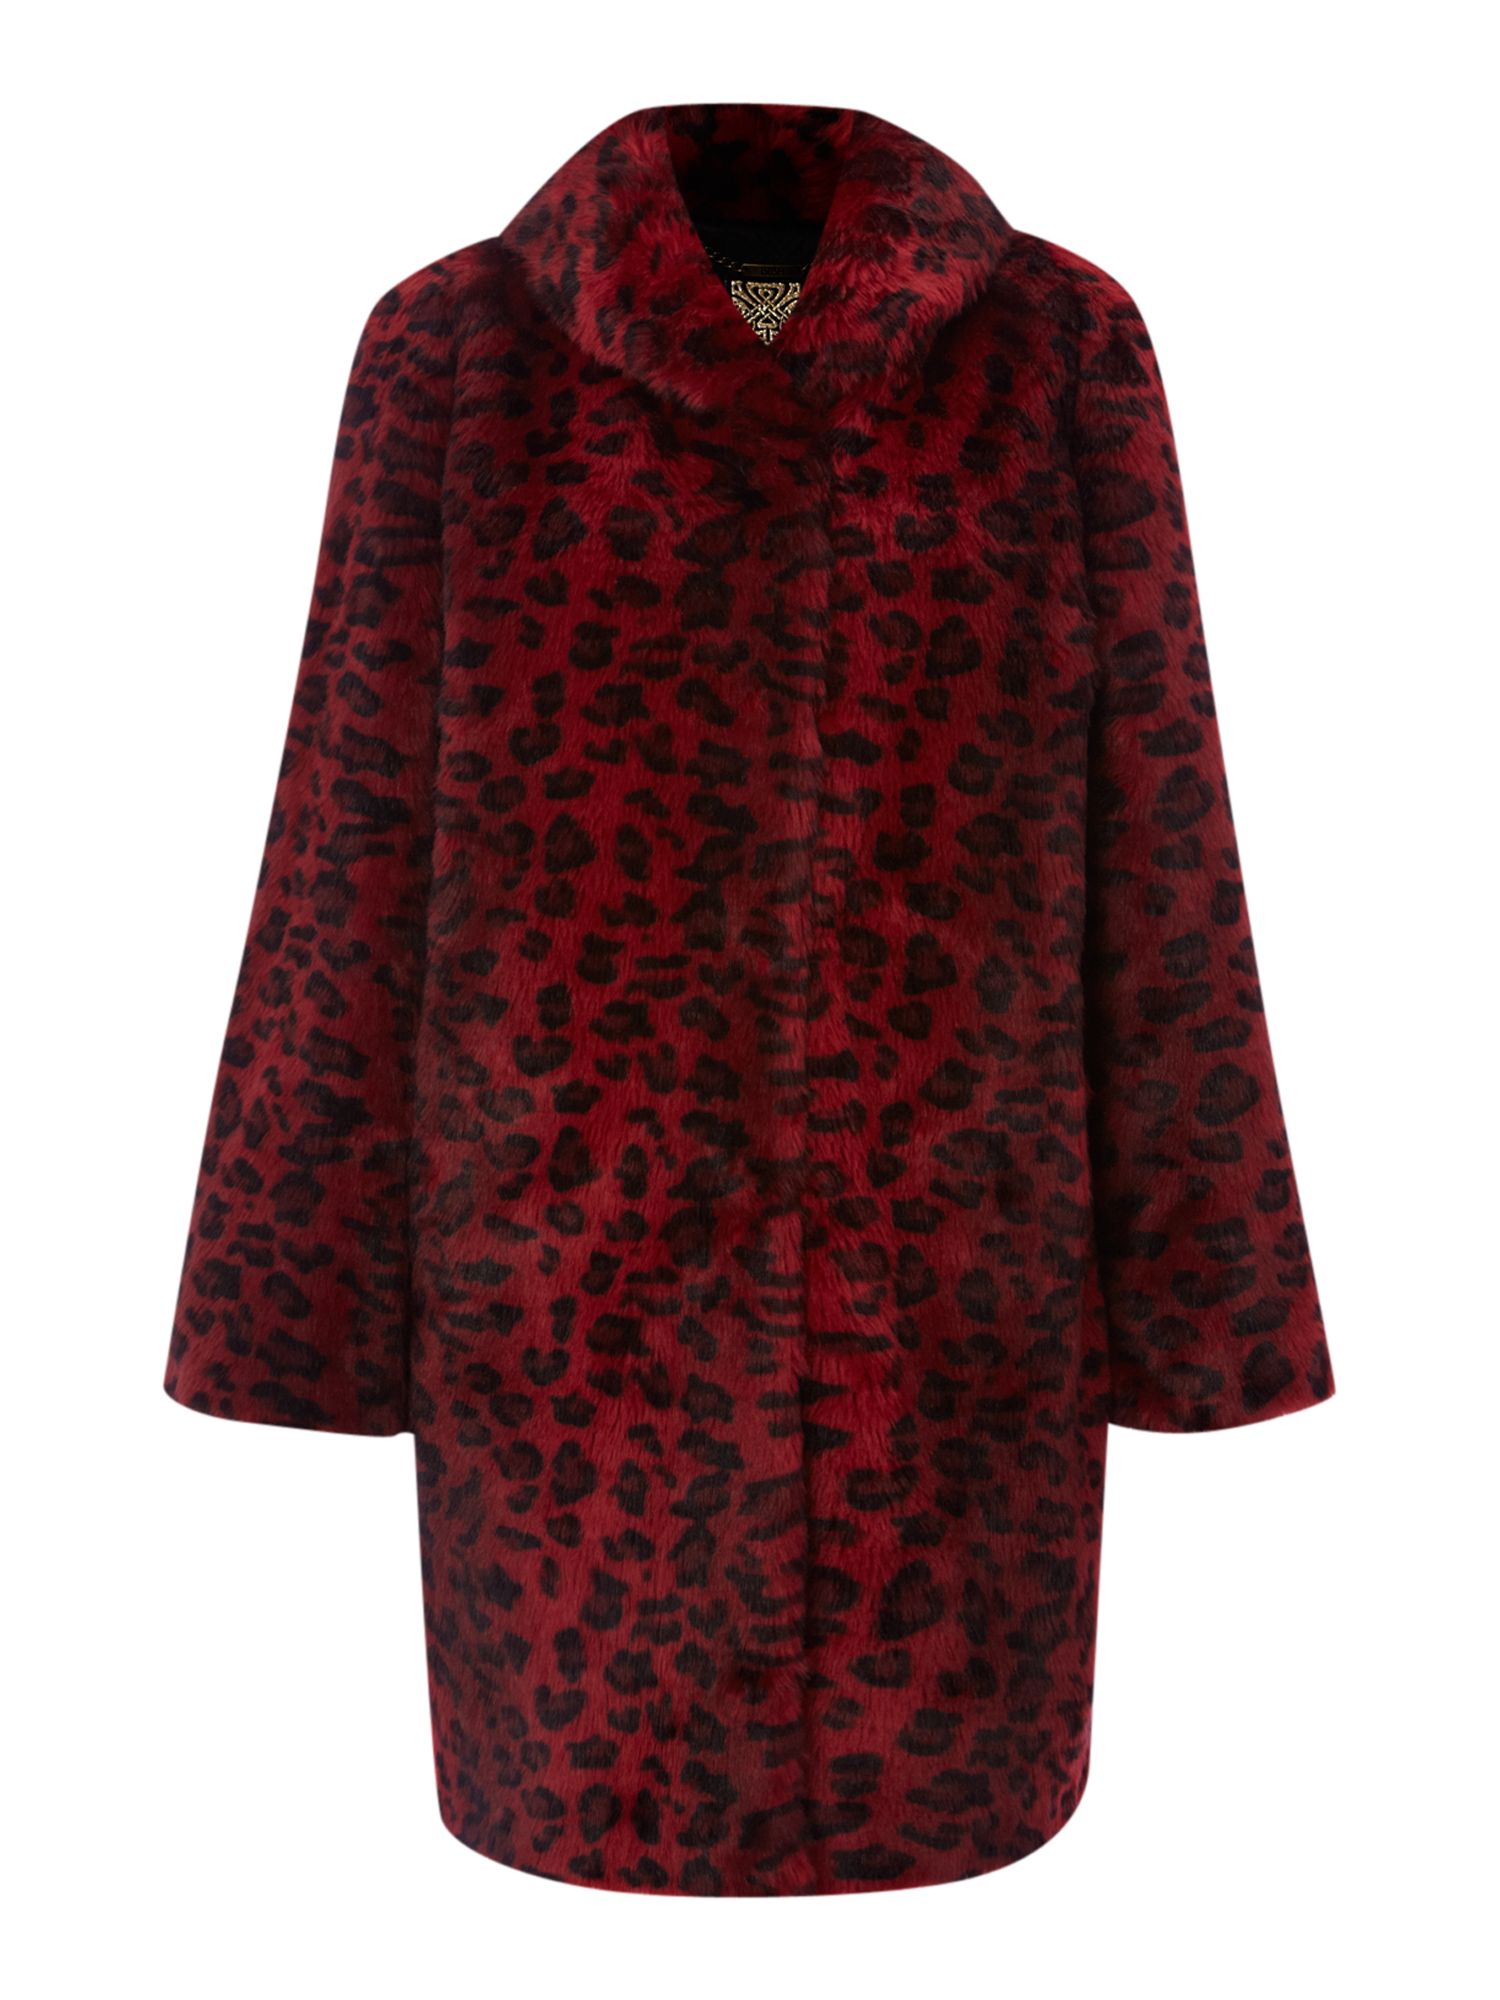 Biba Leopard Portobello Fur Coat in Red (black & red) | Lyst